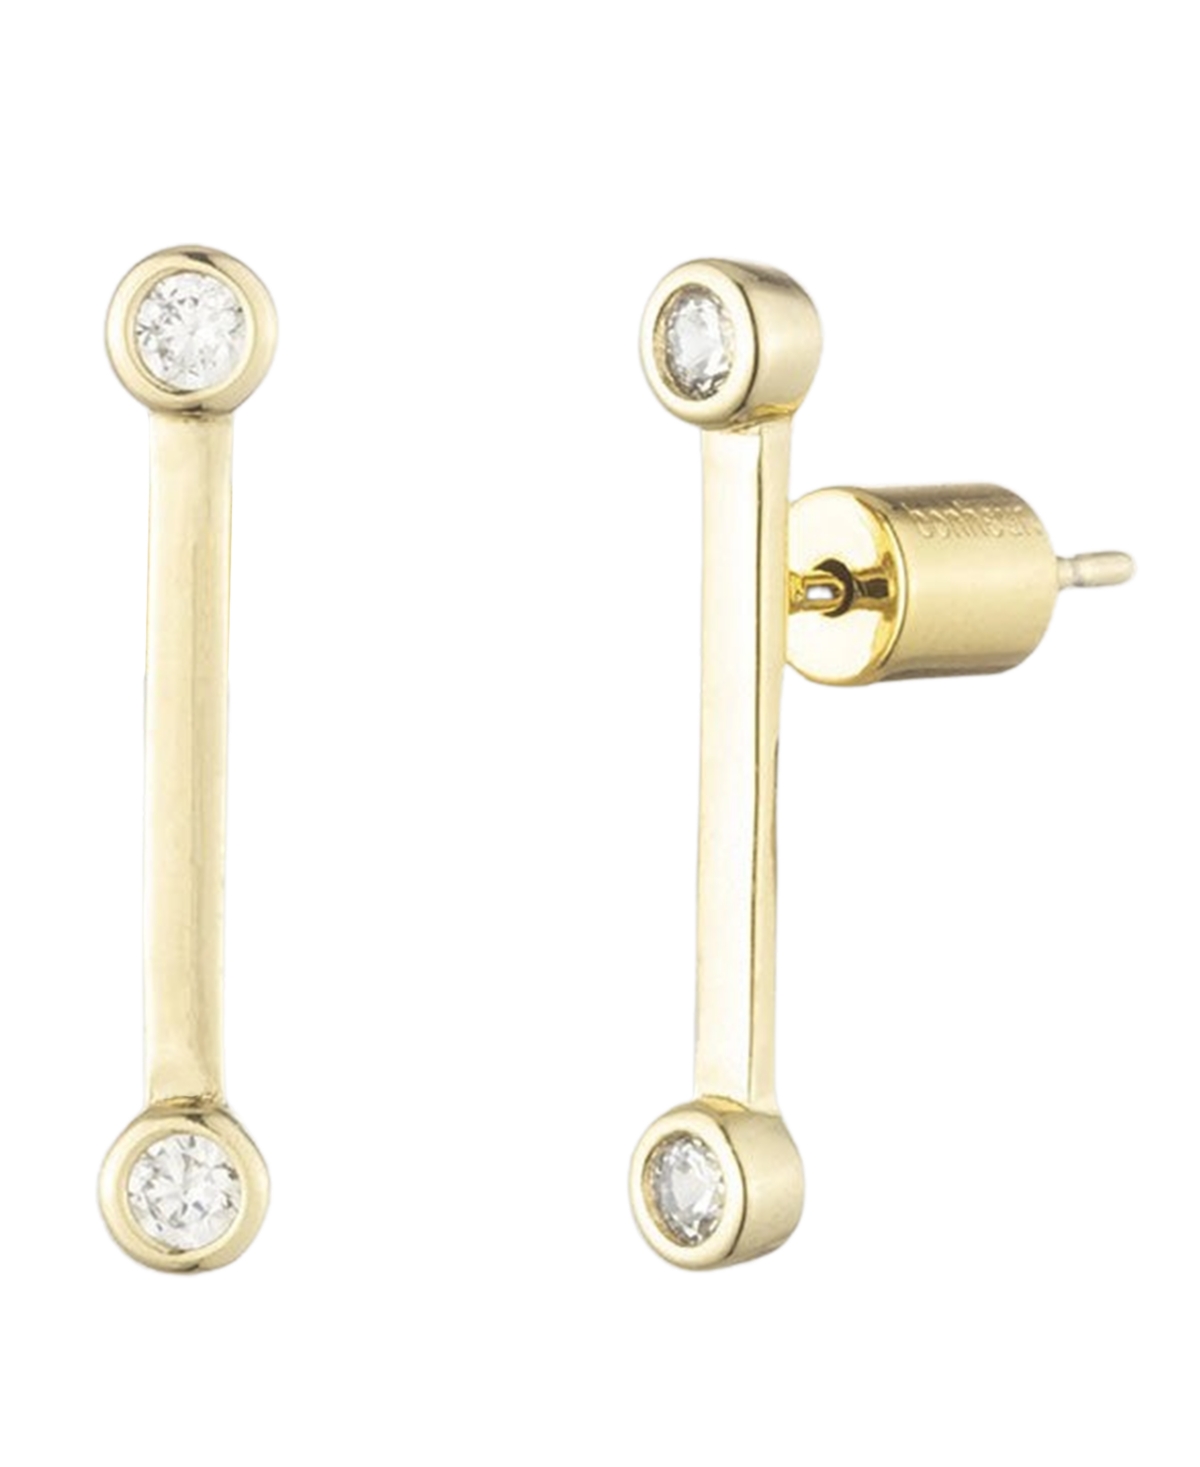 Bonheur Jewelry Diana Stud Crystal Earrings In Karat Gold Plated Brass